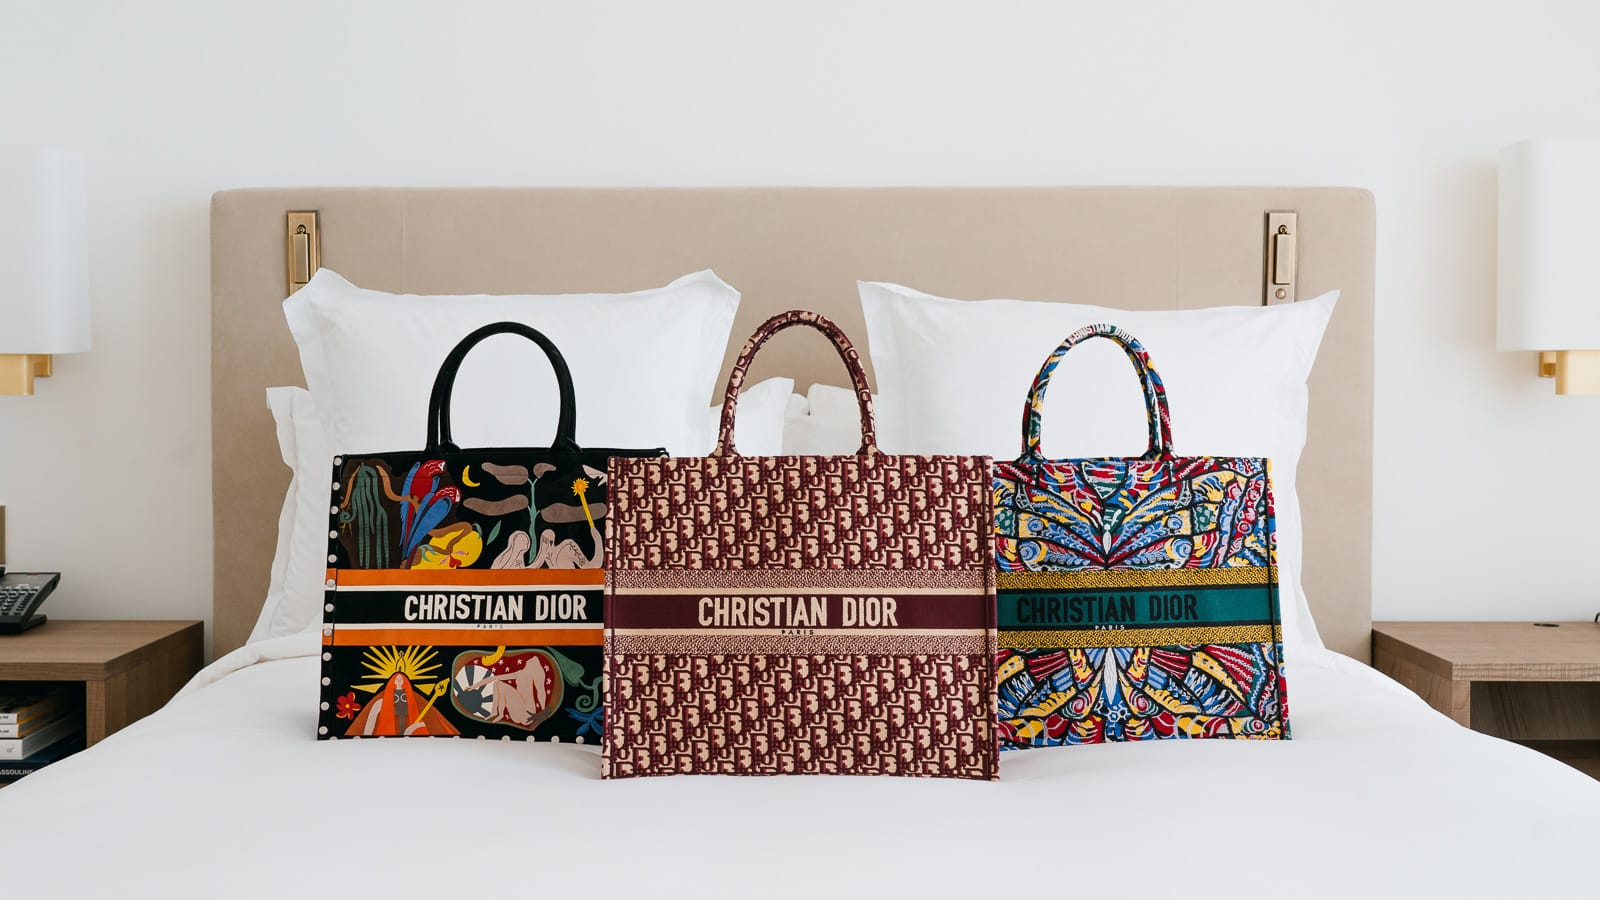 Louis Vuitton Releases Brand New Love Lock Collection - PurseBlog